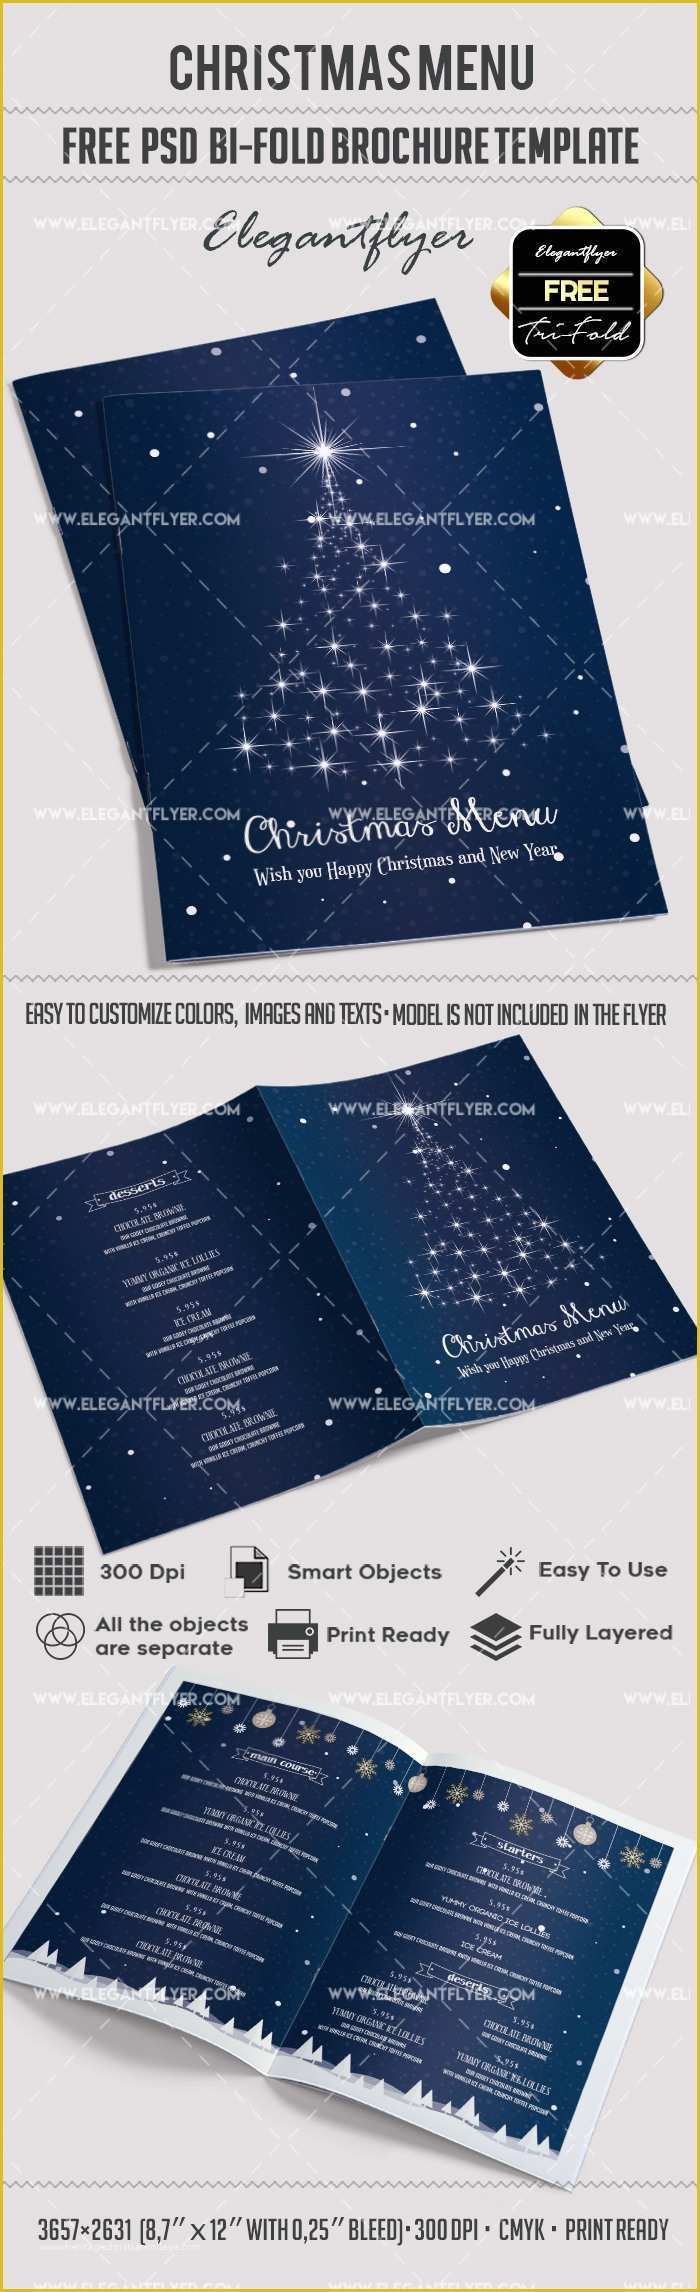 Bi Fold Brochure Template Free Of Free Christmas Menu – Bi Fold Psd Brochure Template – by